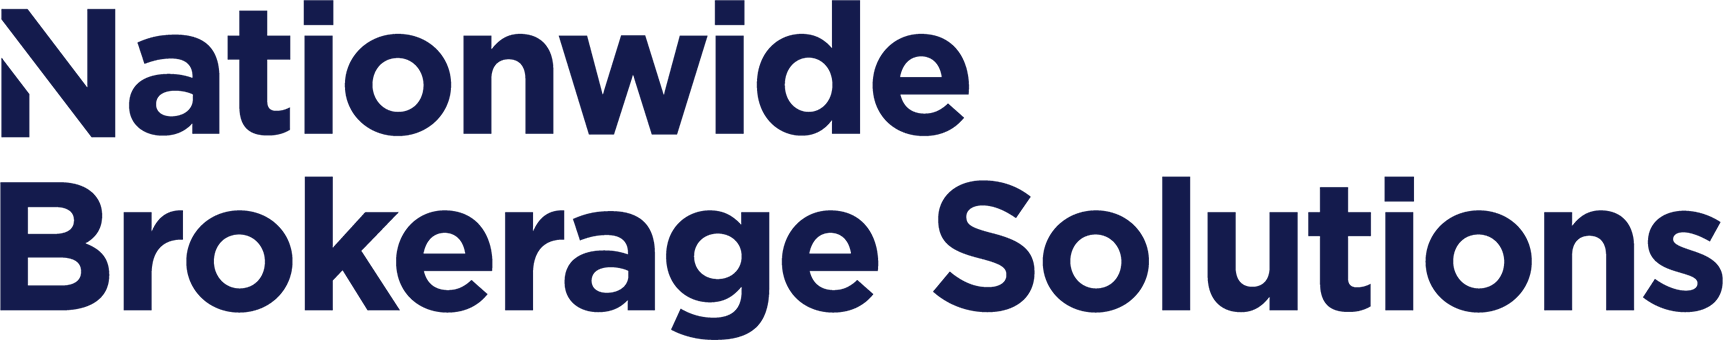 Nationwide Insurance Logo